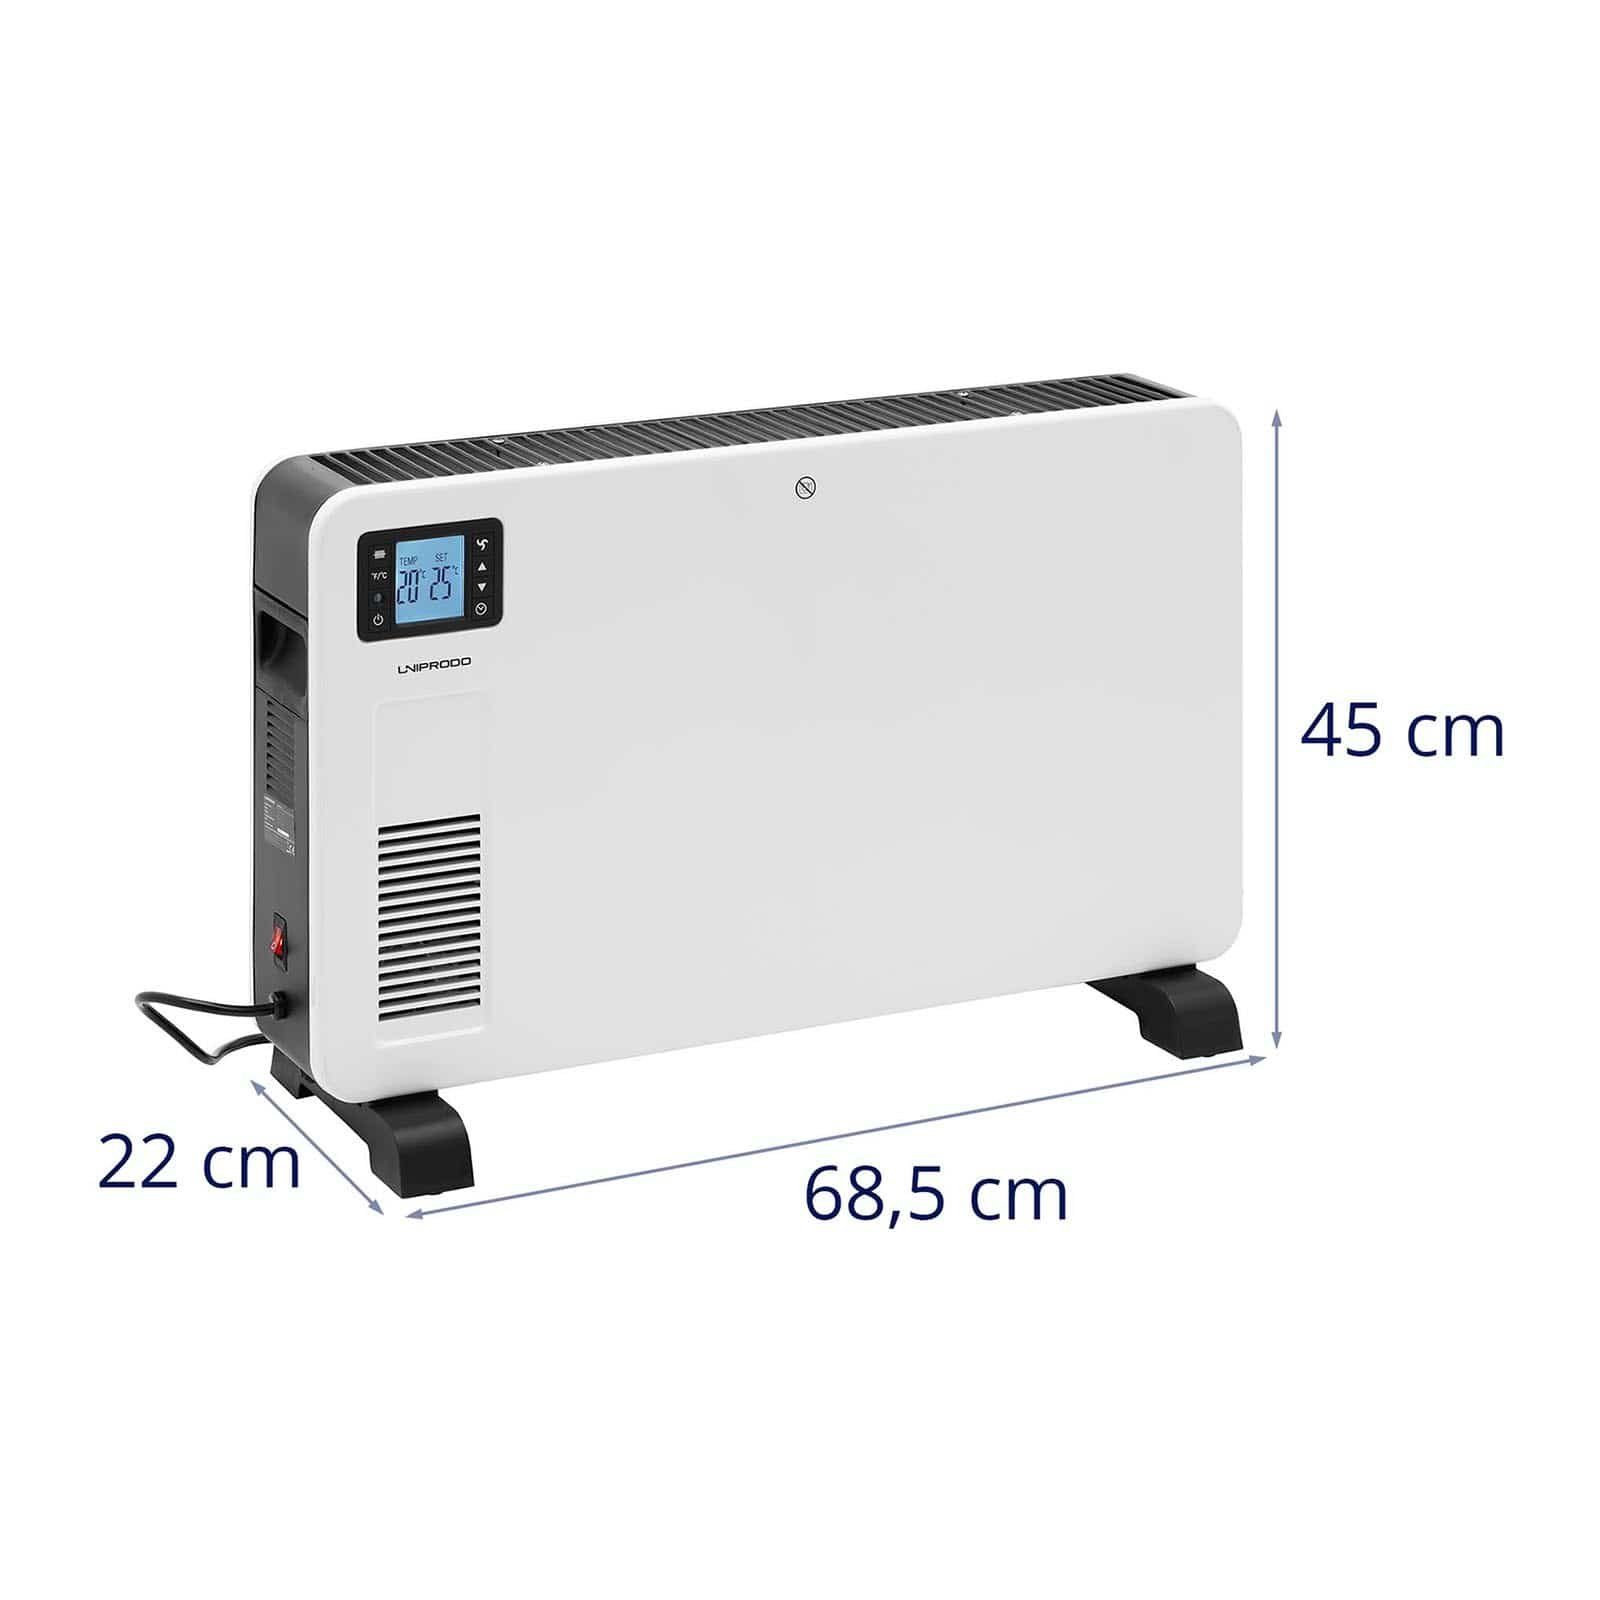 Uniprodo Konvektor Konvektorheizung Elektroheizung Timer 5 °C - 25 37 W LCD 2300 m²